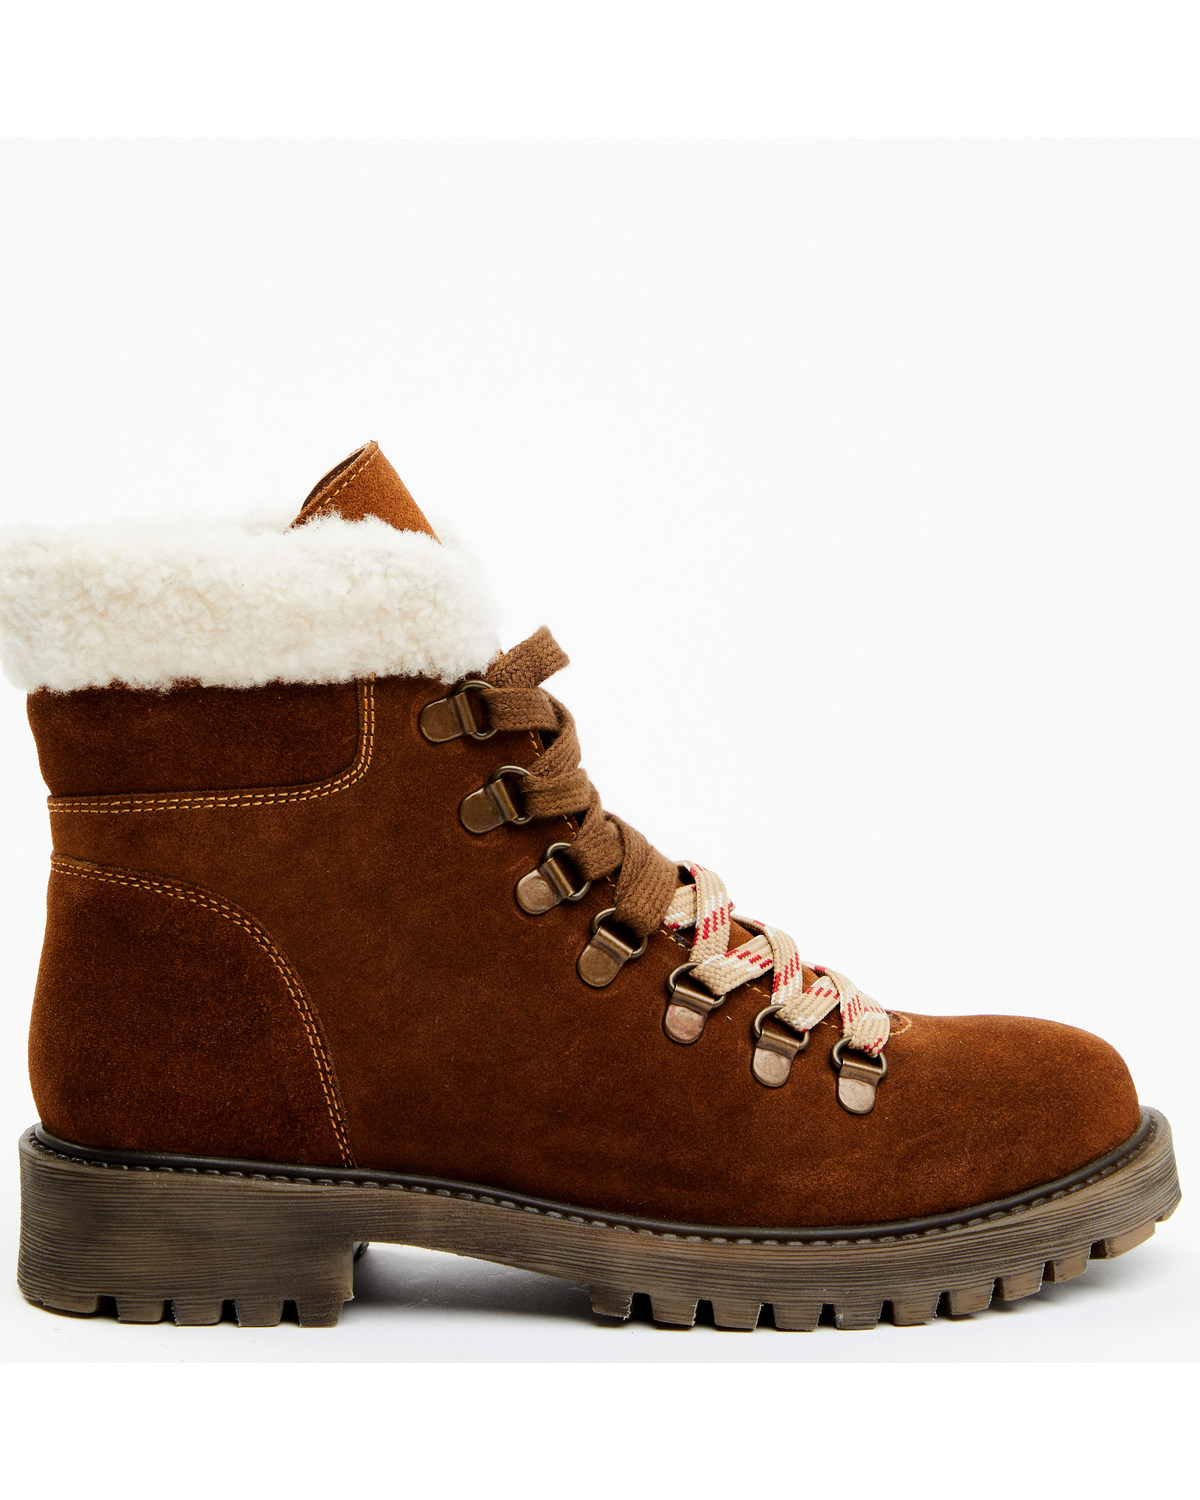 Cleo + Wolf Women's Fashion Hiker Boots | Boot Barn